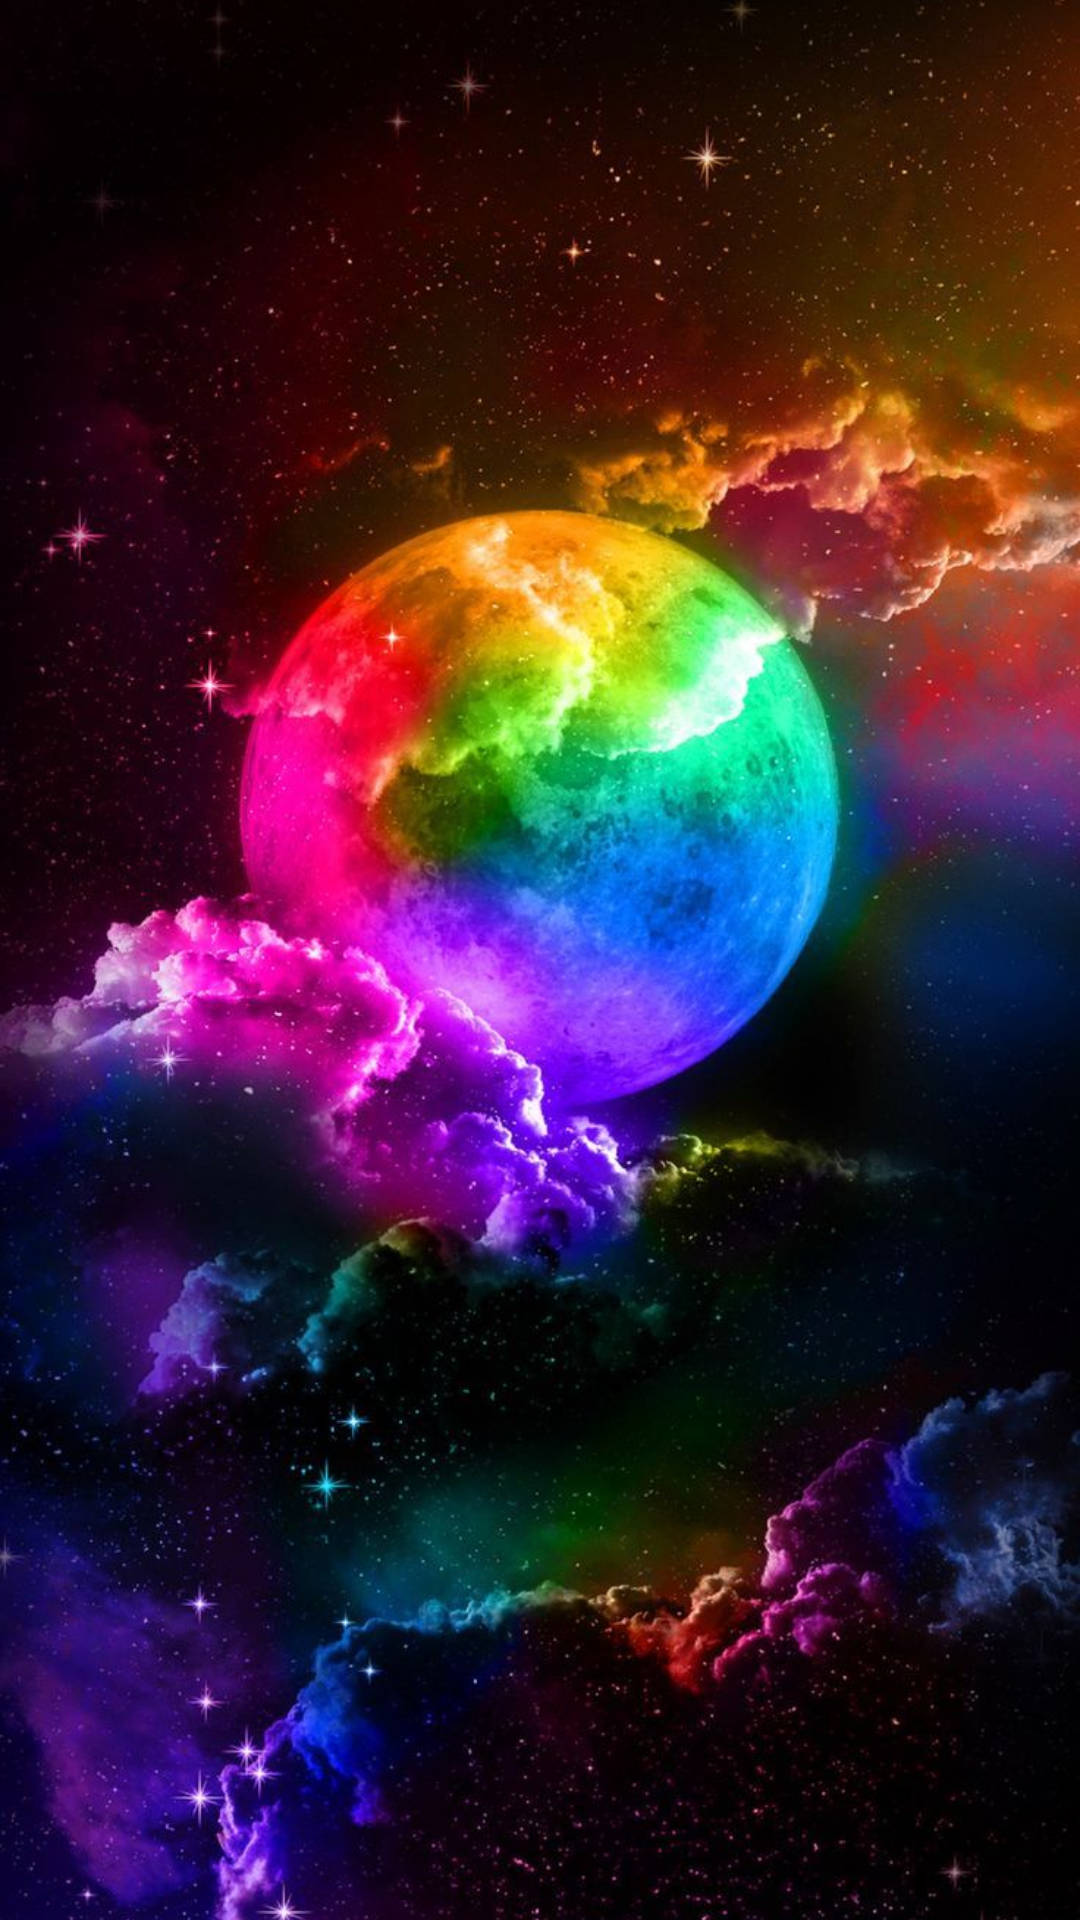 Rainbow Galaxy Background Images  Free Download on Freepik